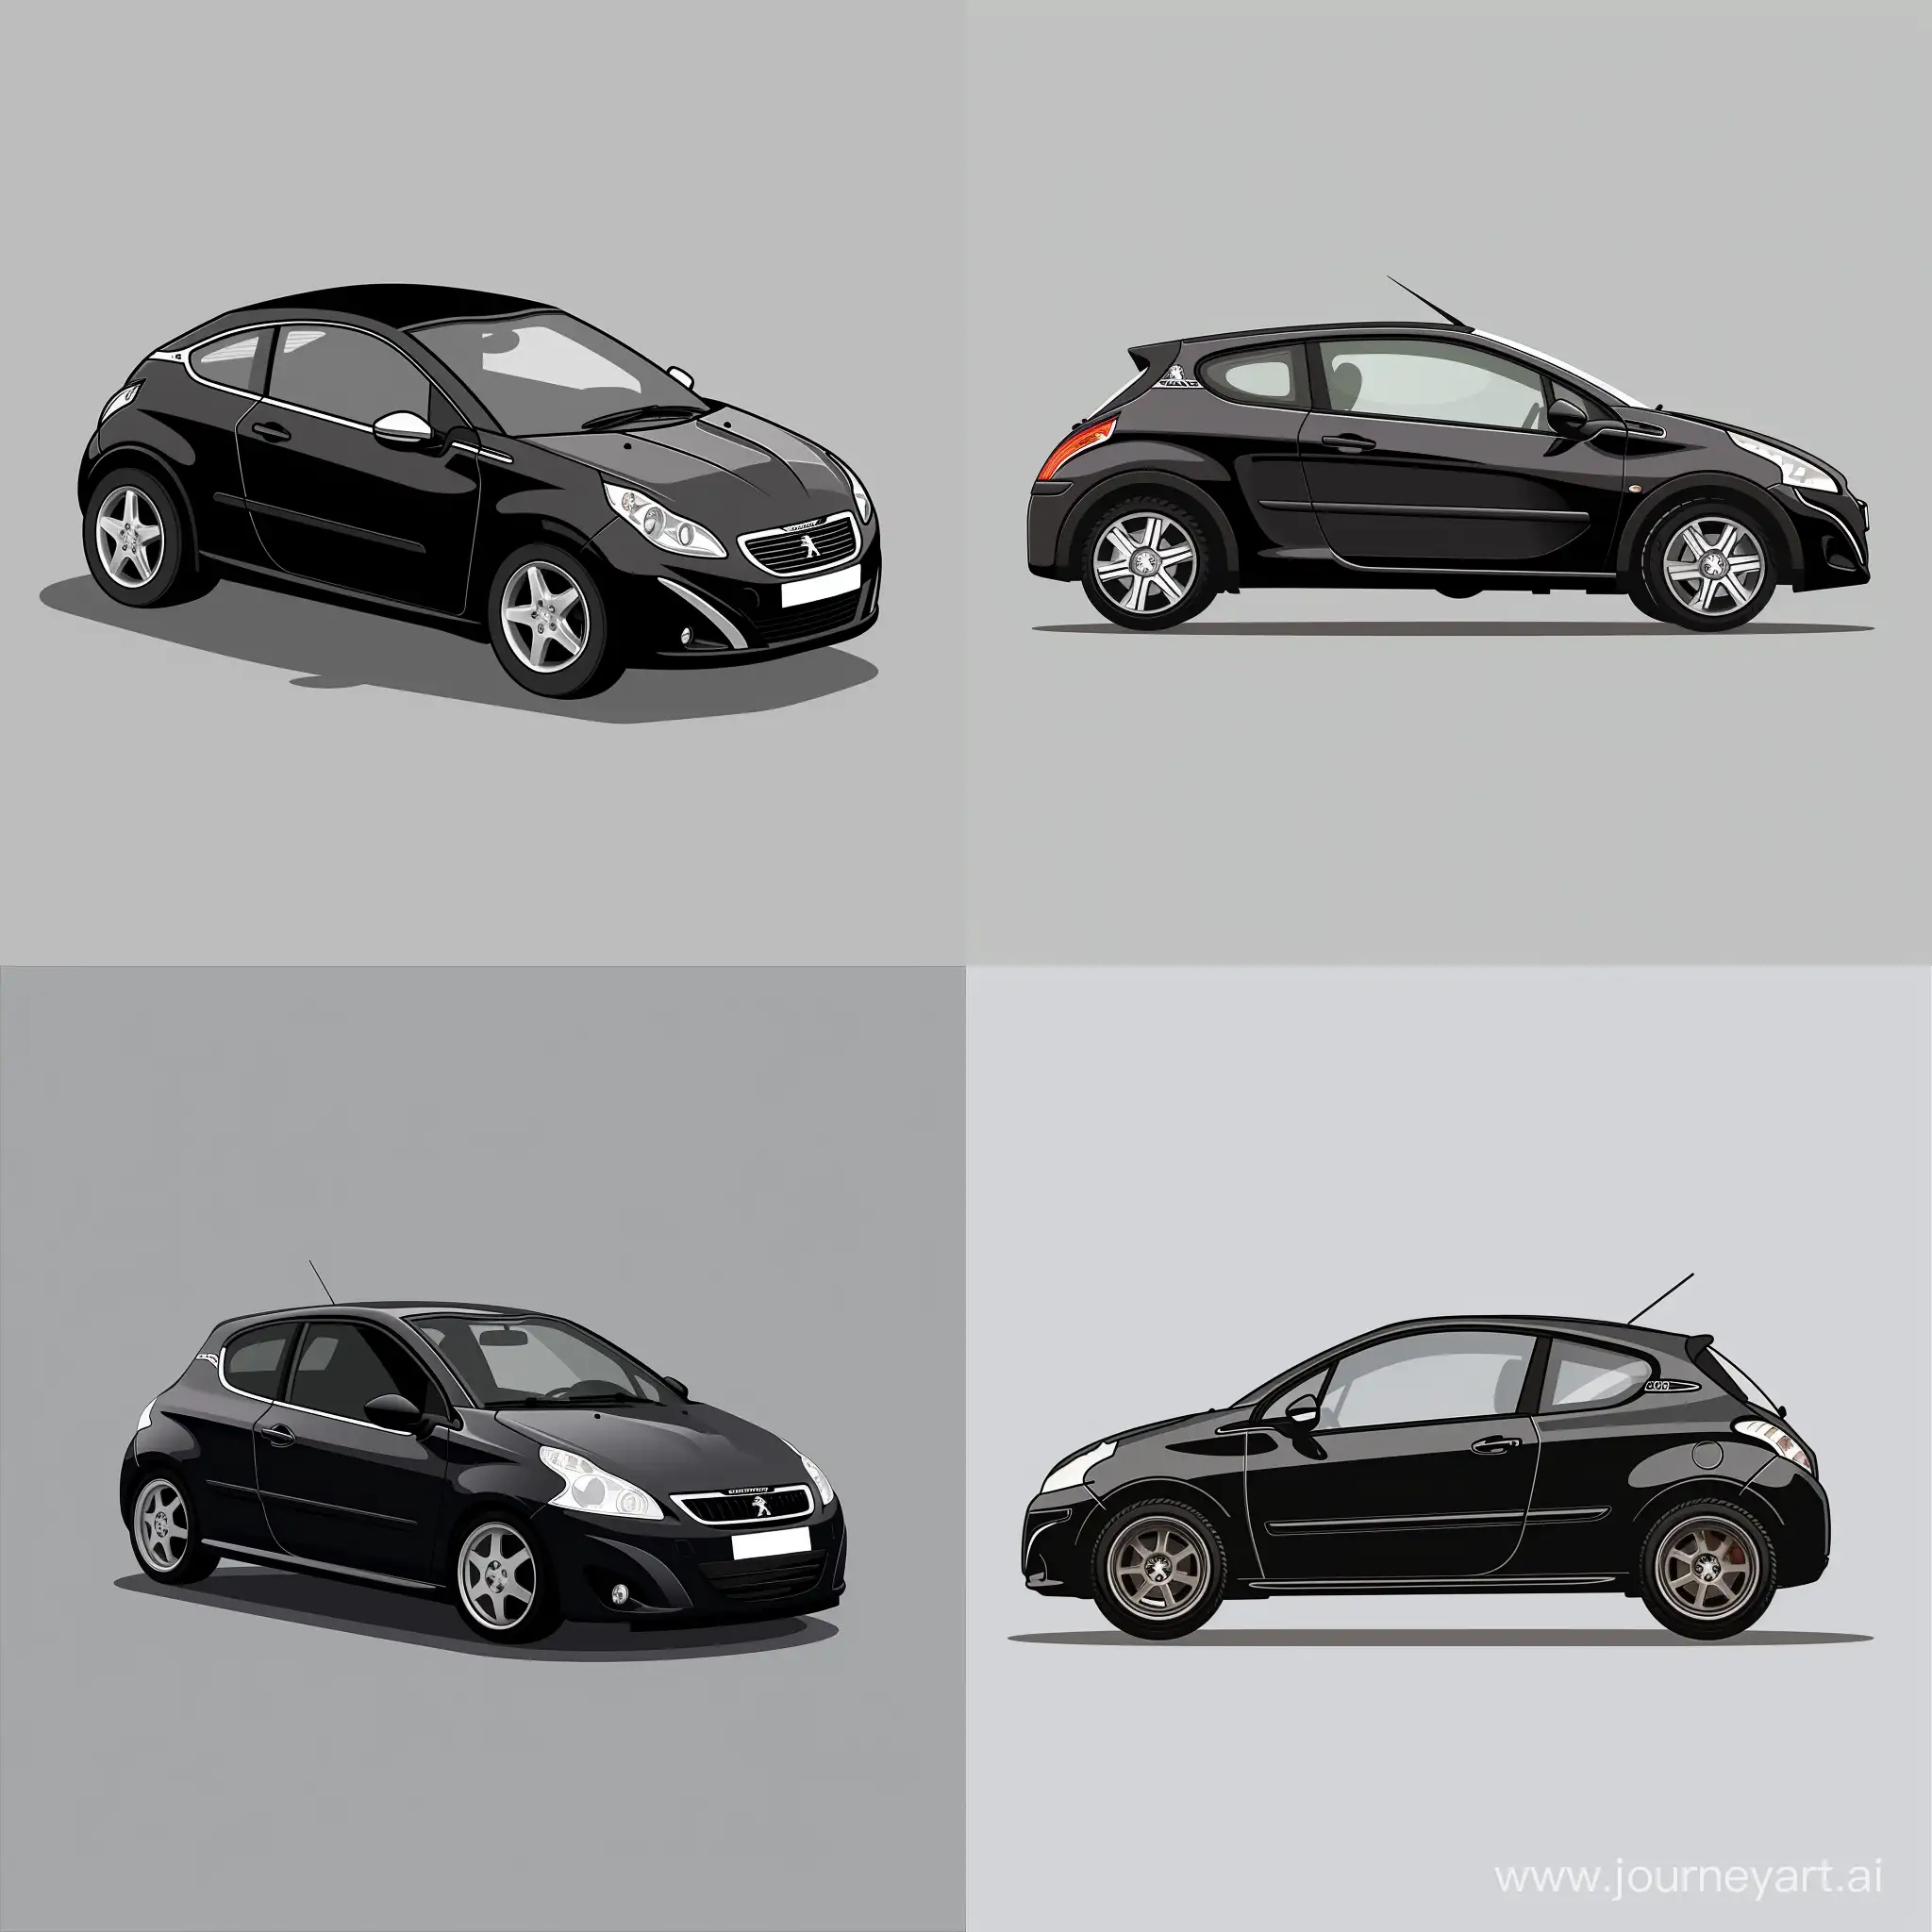 Minimalism 2D Car 2/3 View Illustration of: Black 206 Peugeot
, Simple Gray Background, Adobe Illustrator Software, High Precision